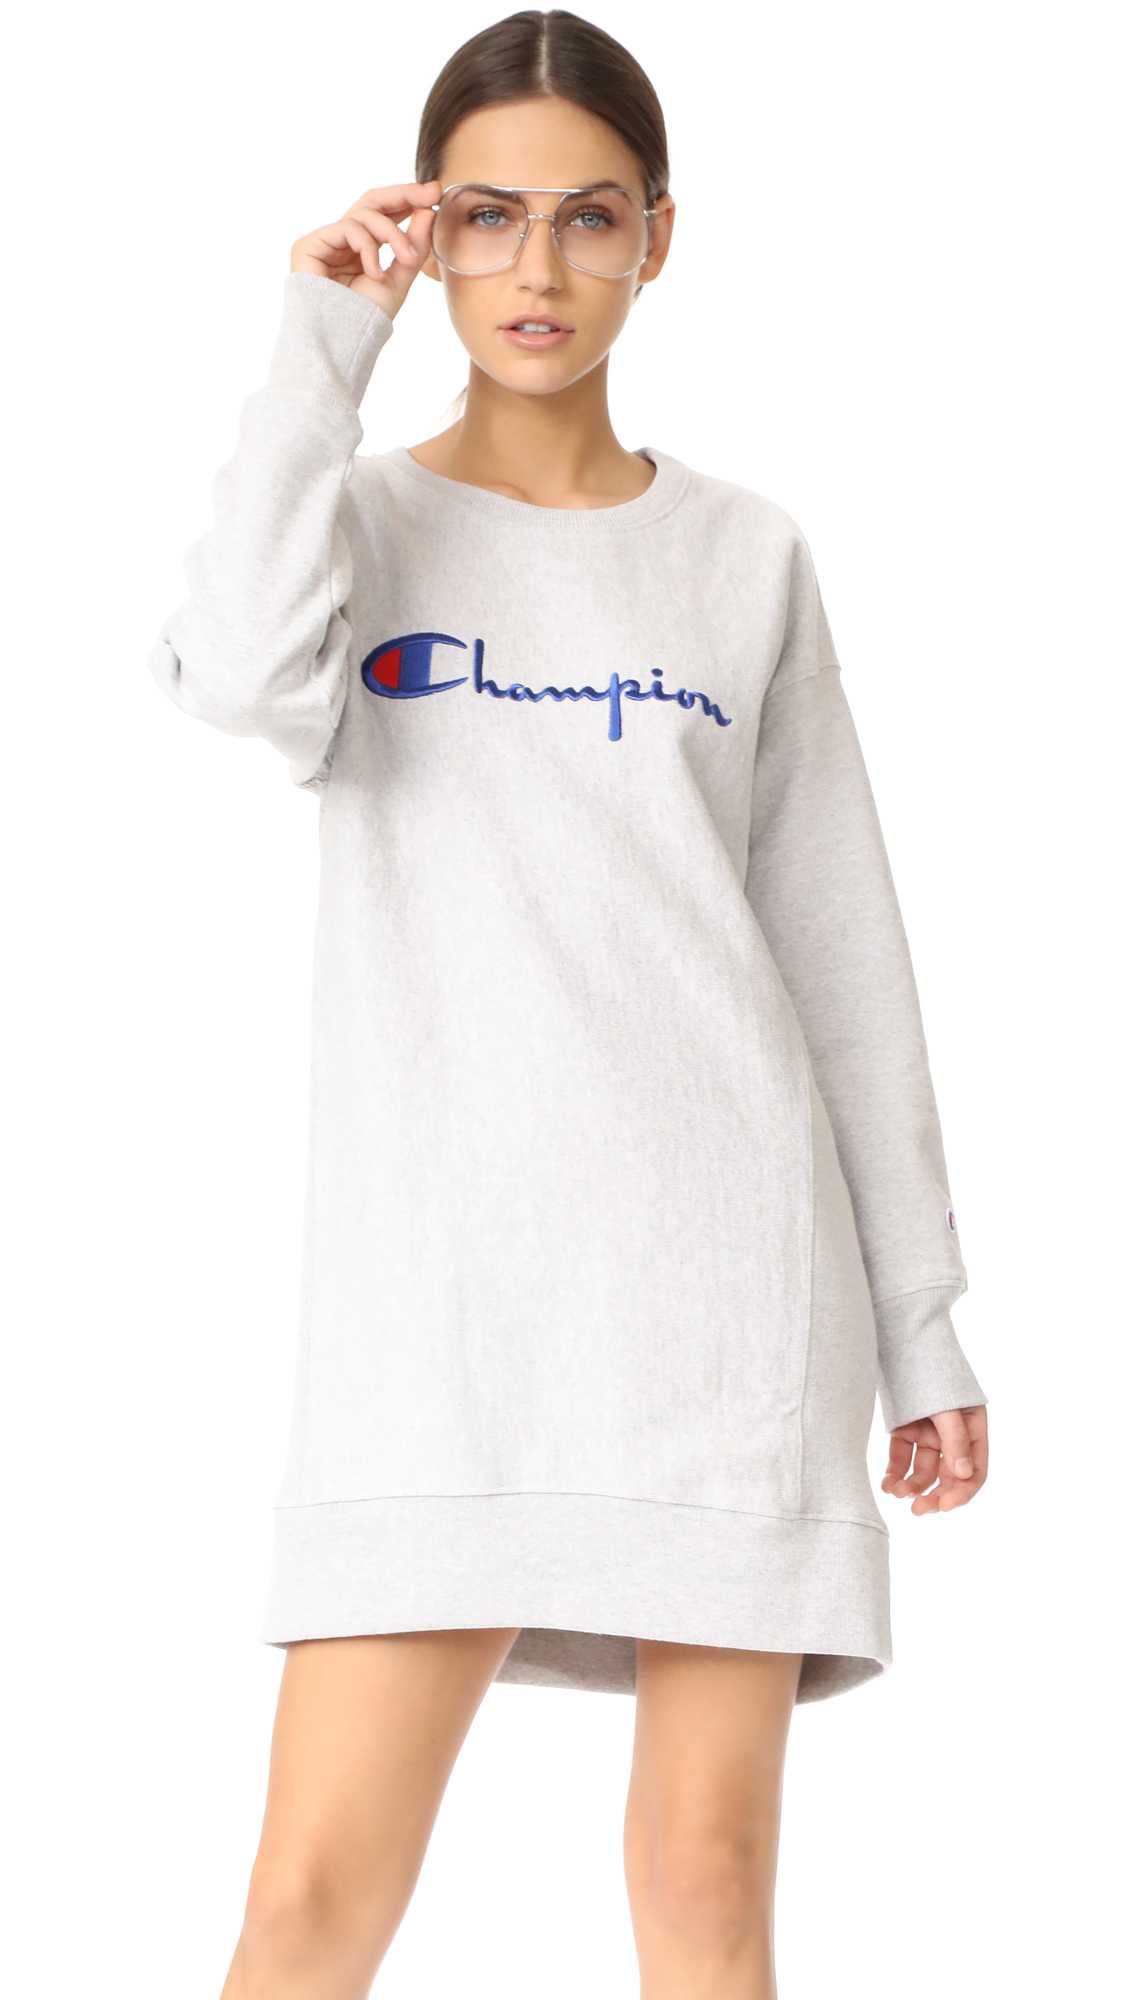 Champion sweatshirt, available at Shopbop